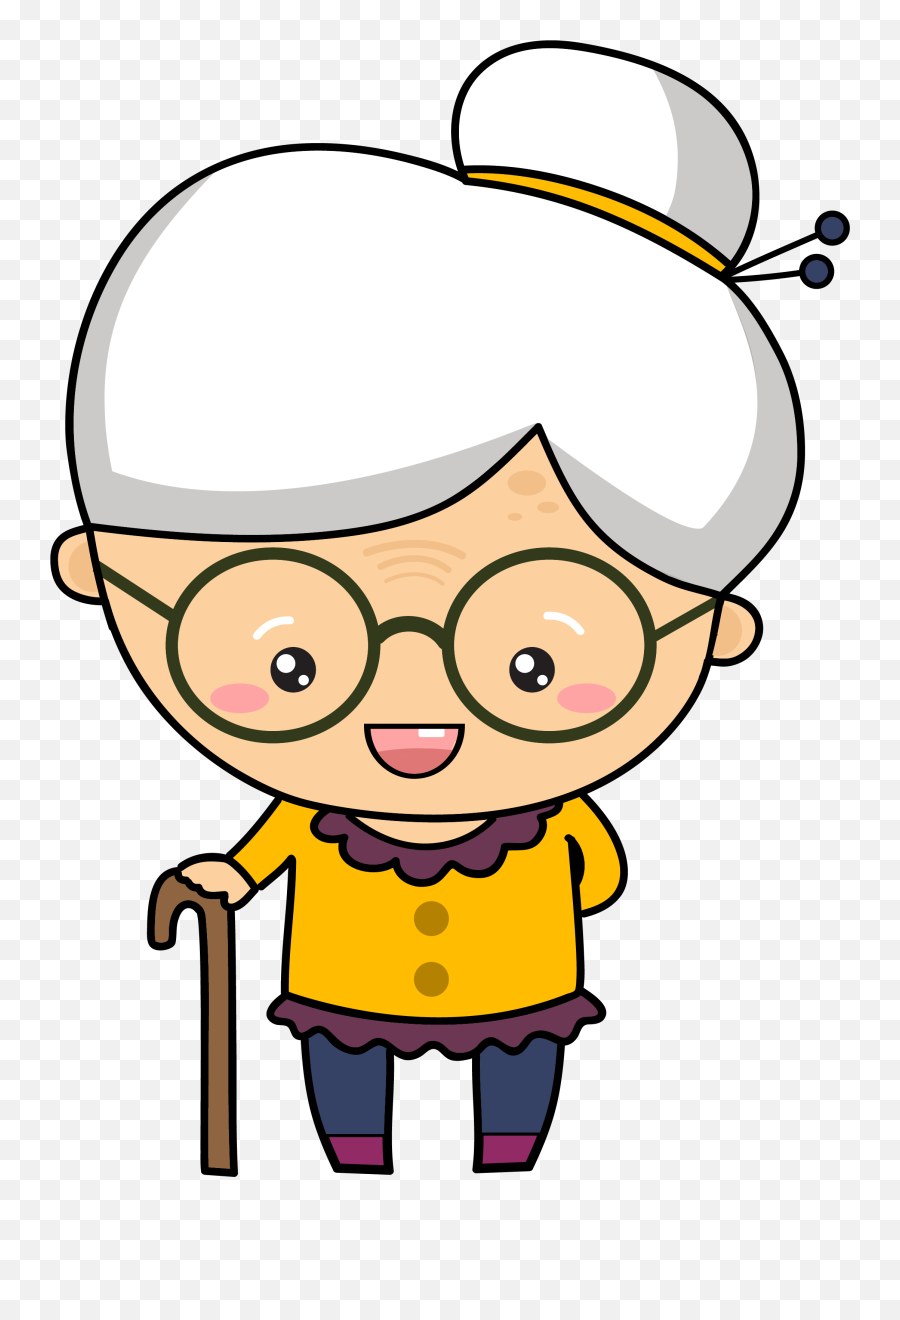 Family Members - Grandma Cartoon Emoji,Grandpa And A Turn Sighn And Grandma Emoji